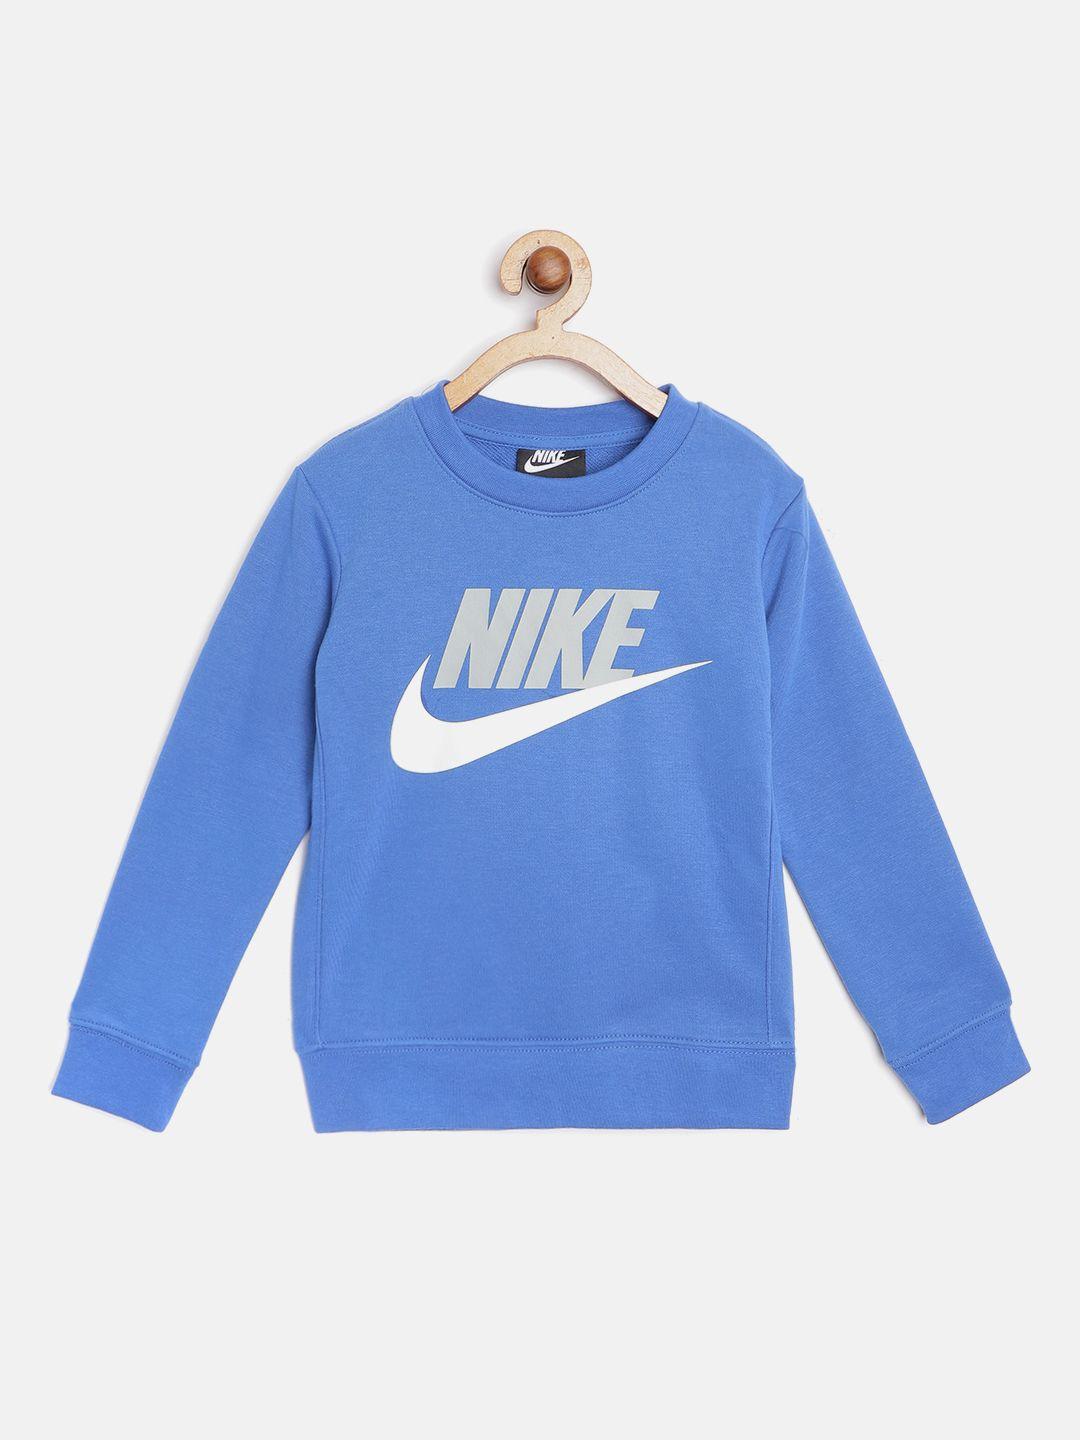 nike boys blue & grey brand logo print club hbr ft hoodie sweatshirt